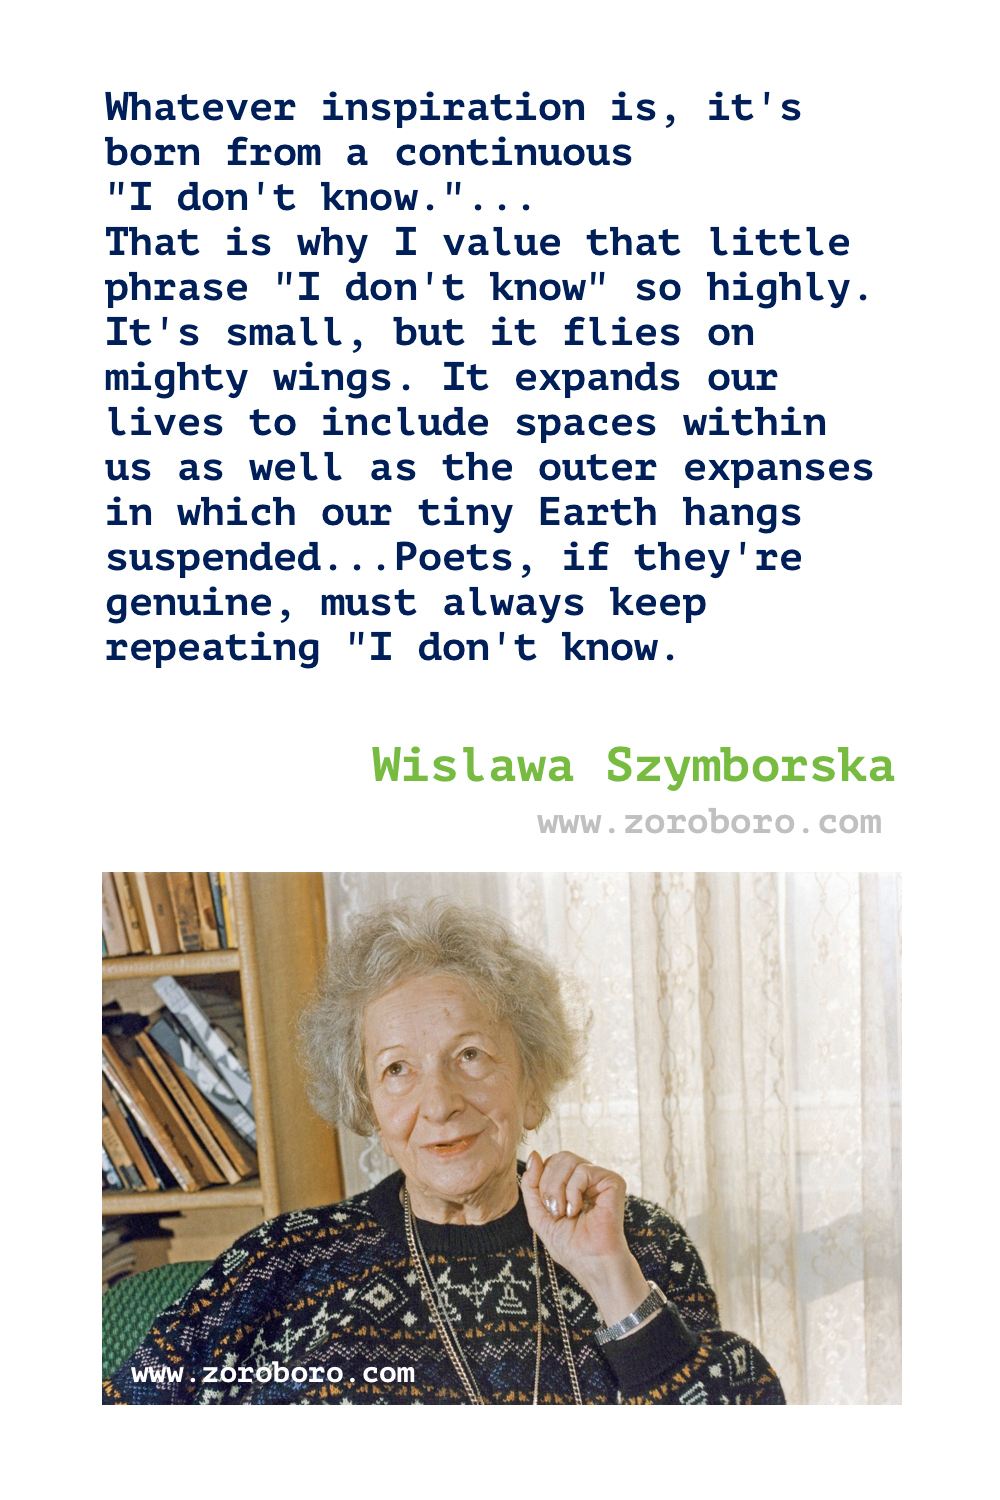 Wislawa Szymborska Quotes. Wislawa Szymborska Poems. Poetry. Poems Of Wisława Szymborska. Wisława Szymborska Books Quotes.